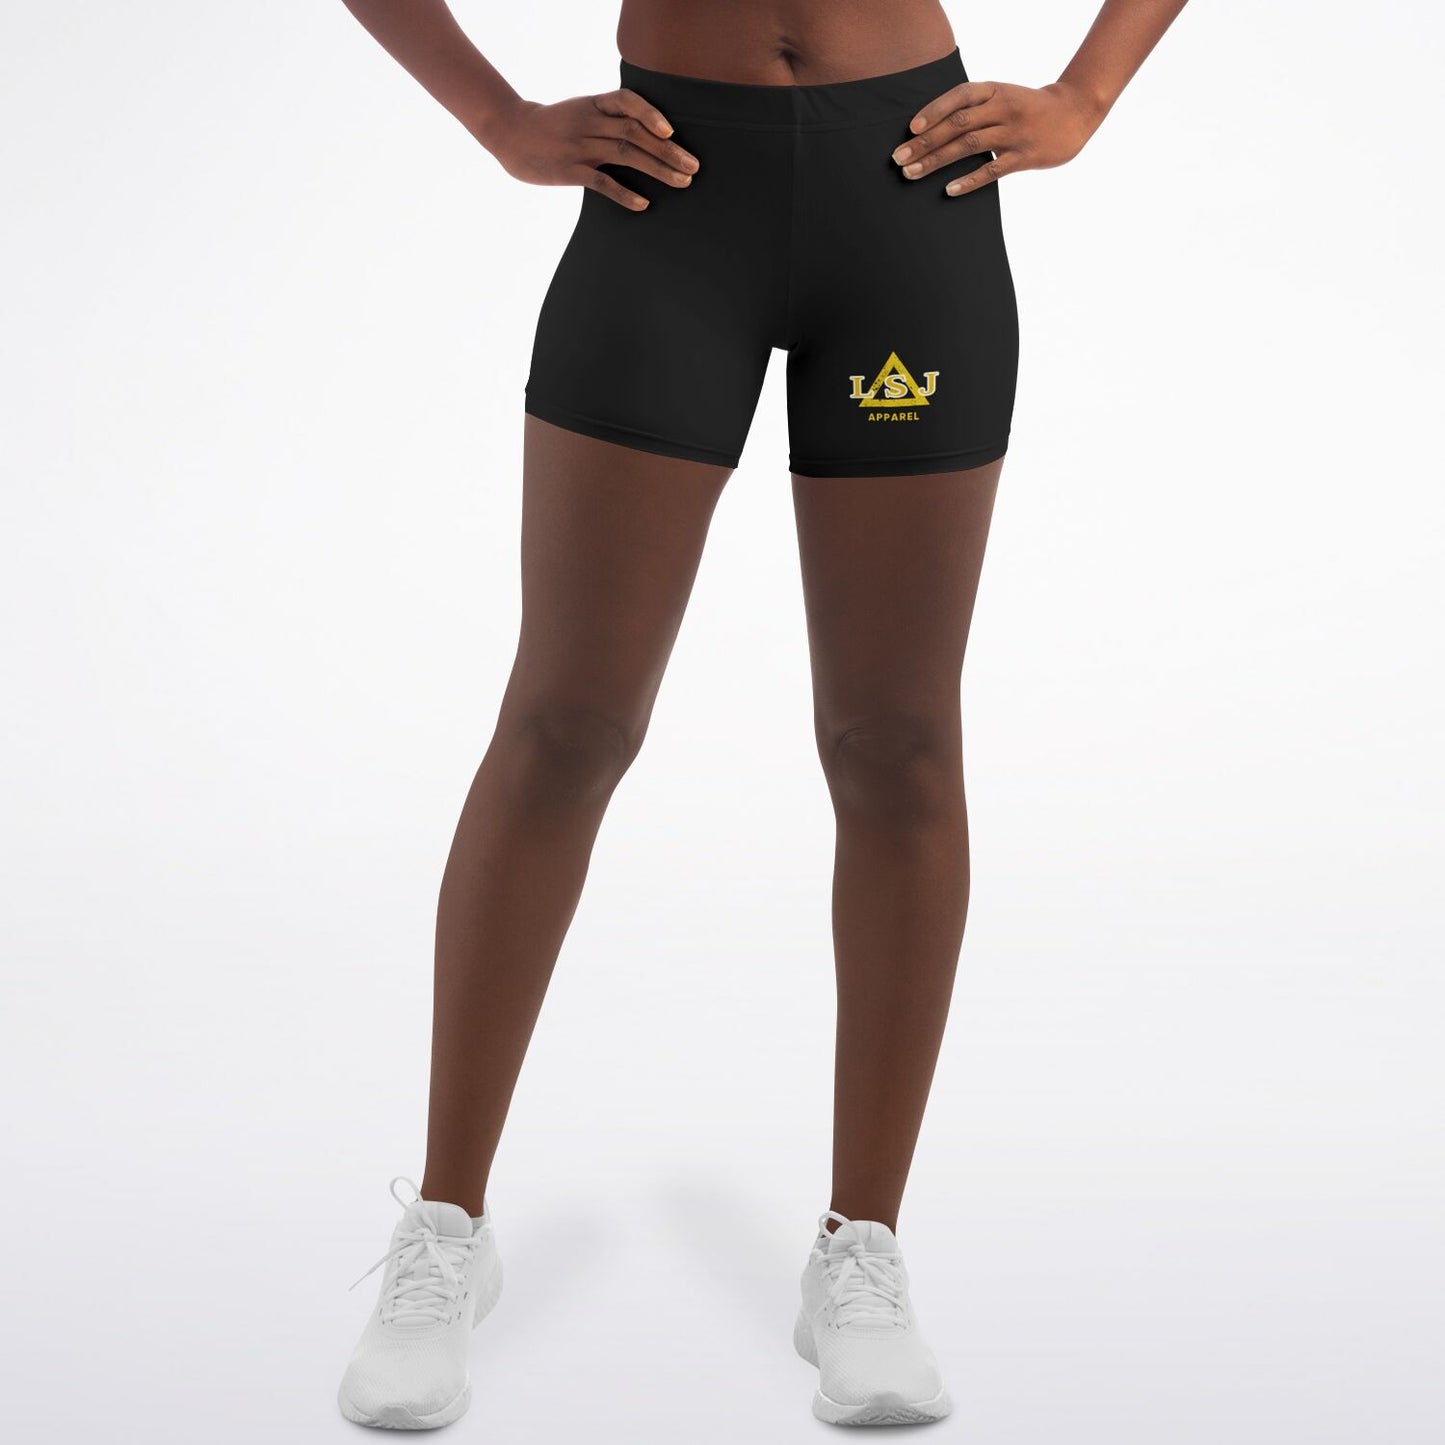 LSJ Black Sports Bra & Legging Short Set